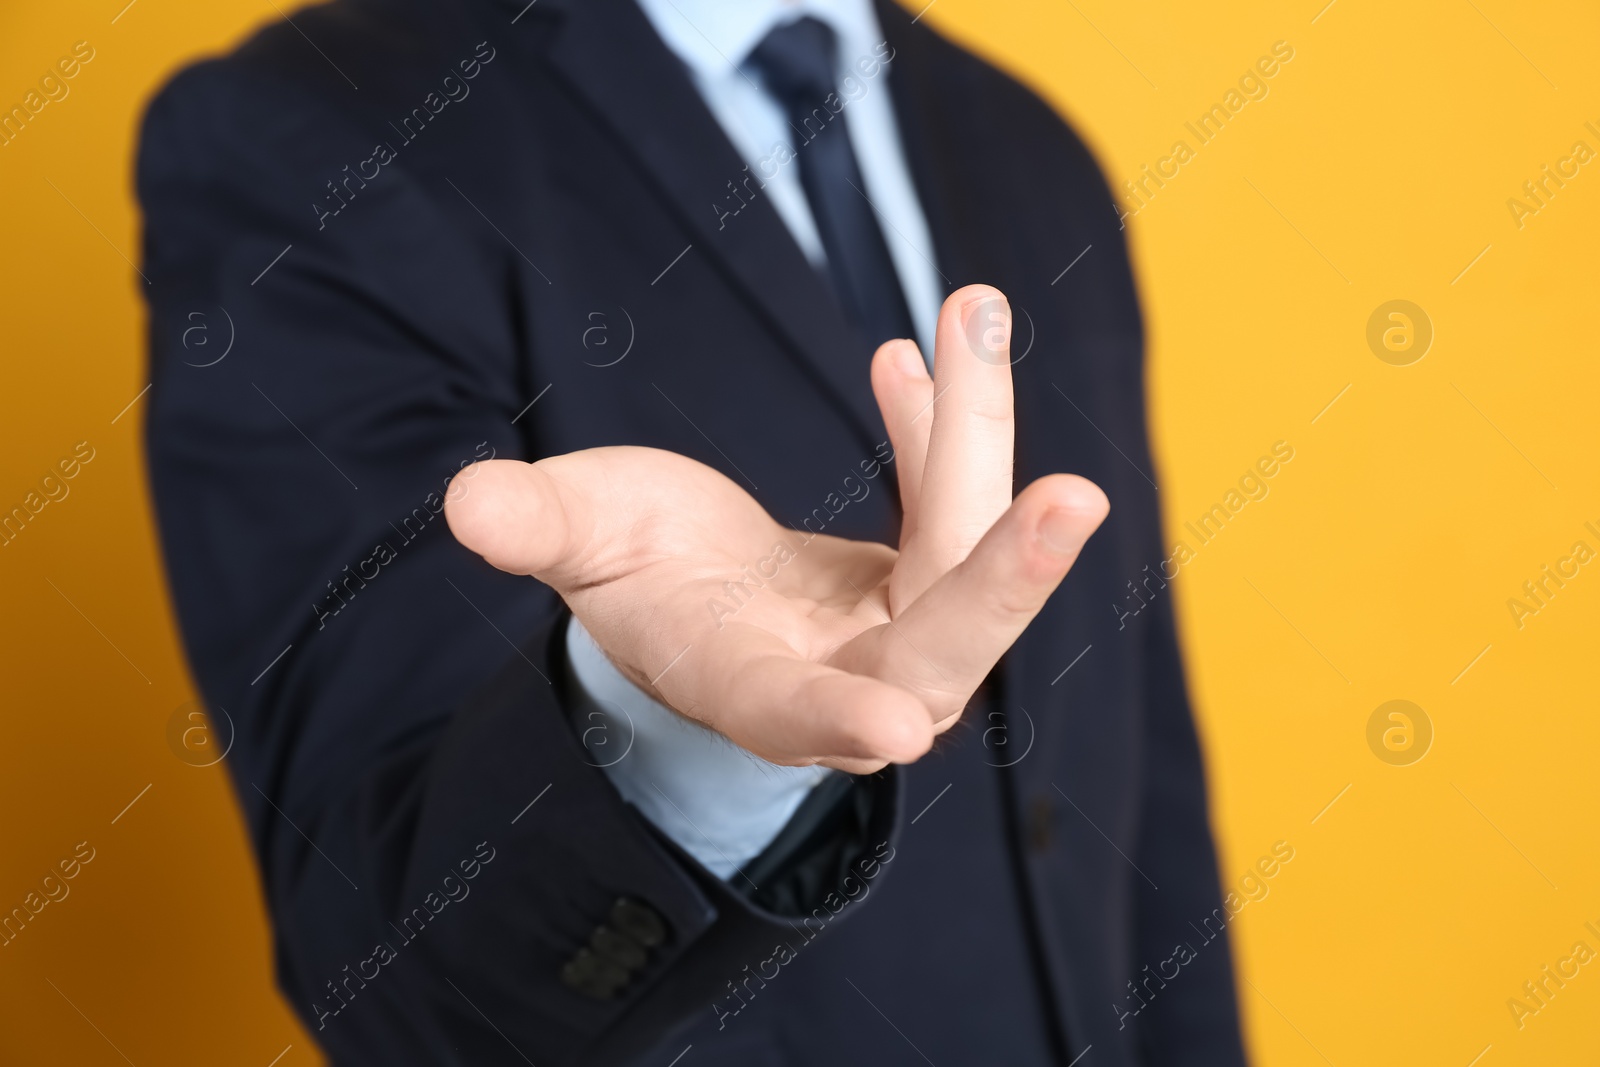 Photo of Businessman showing something against orange background, focus on hand